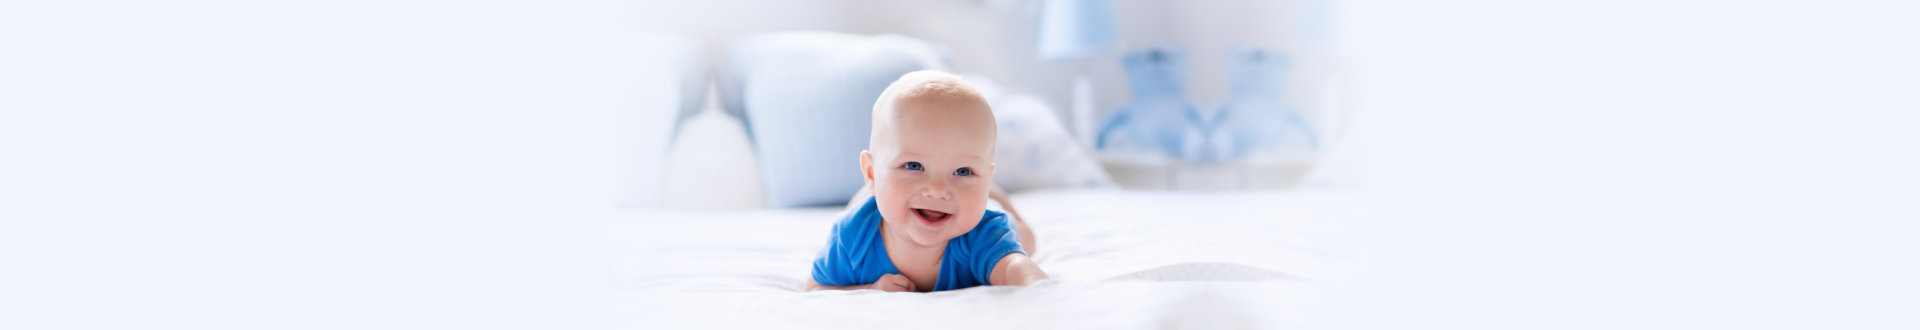 infant smiling while crawling